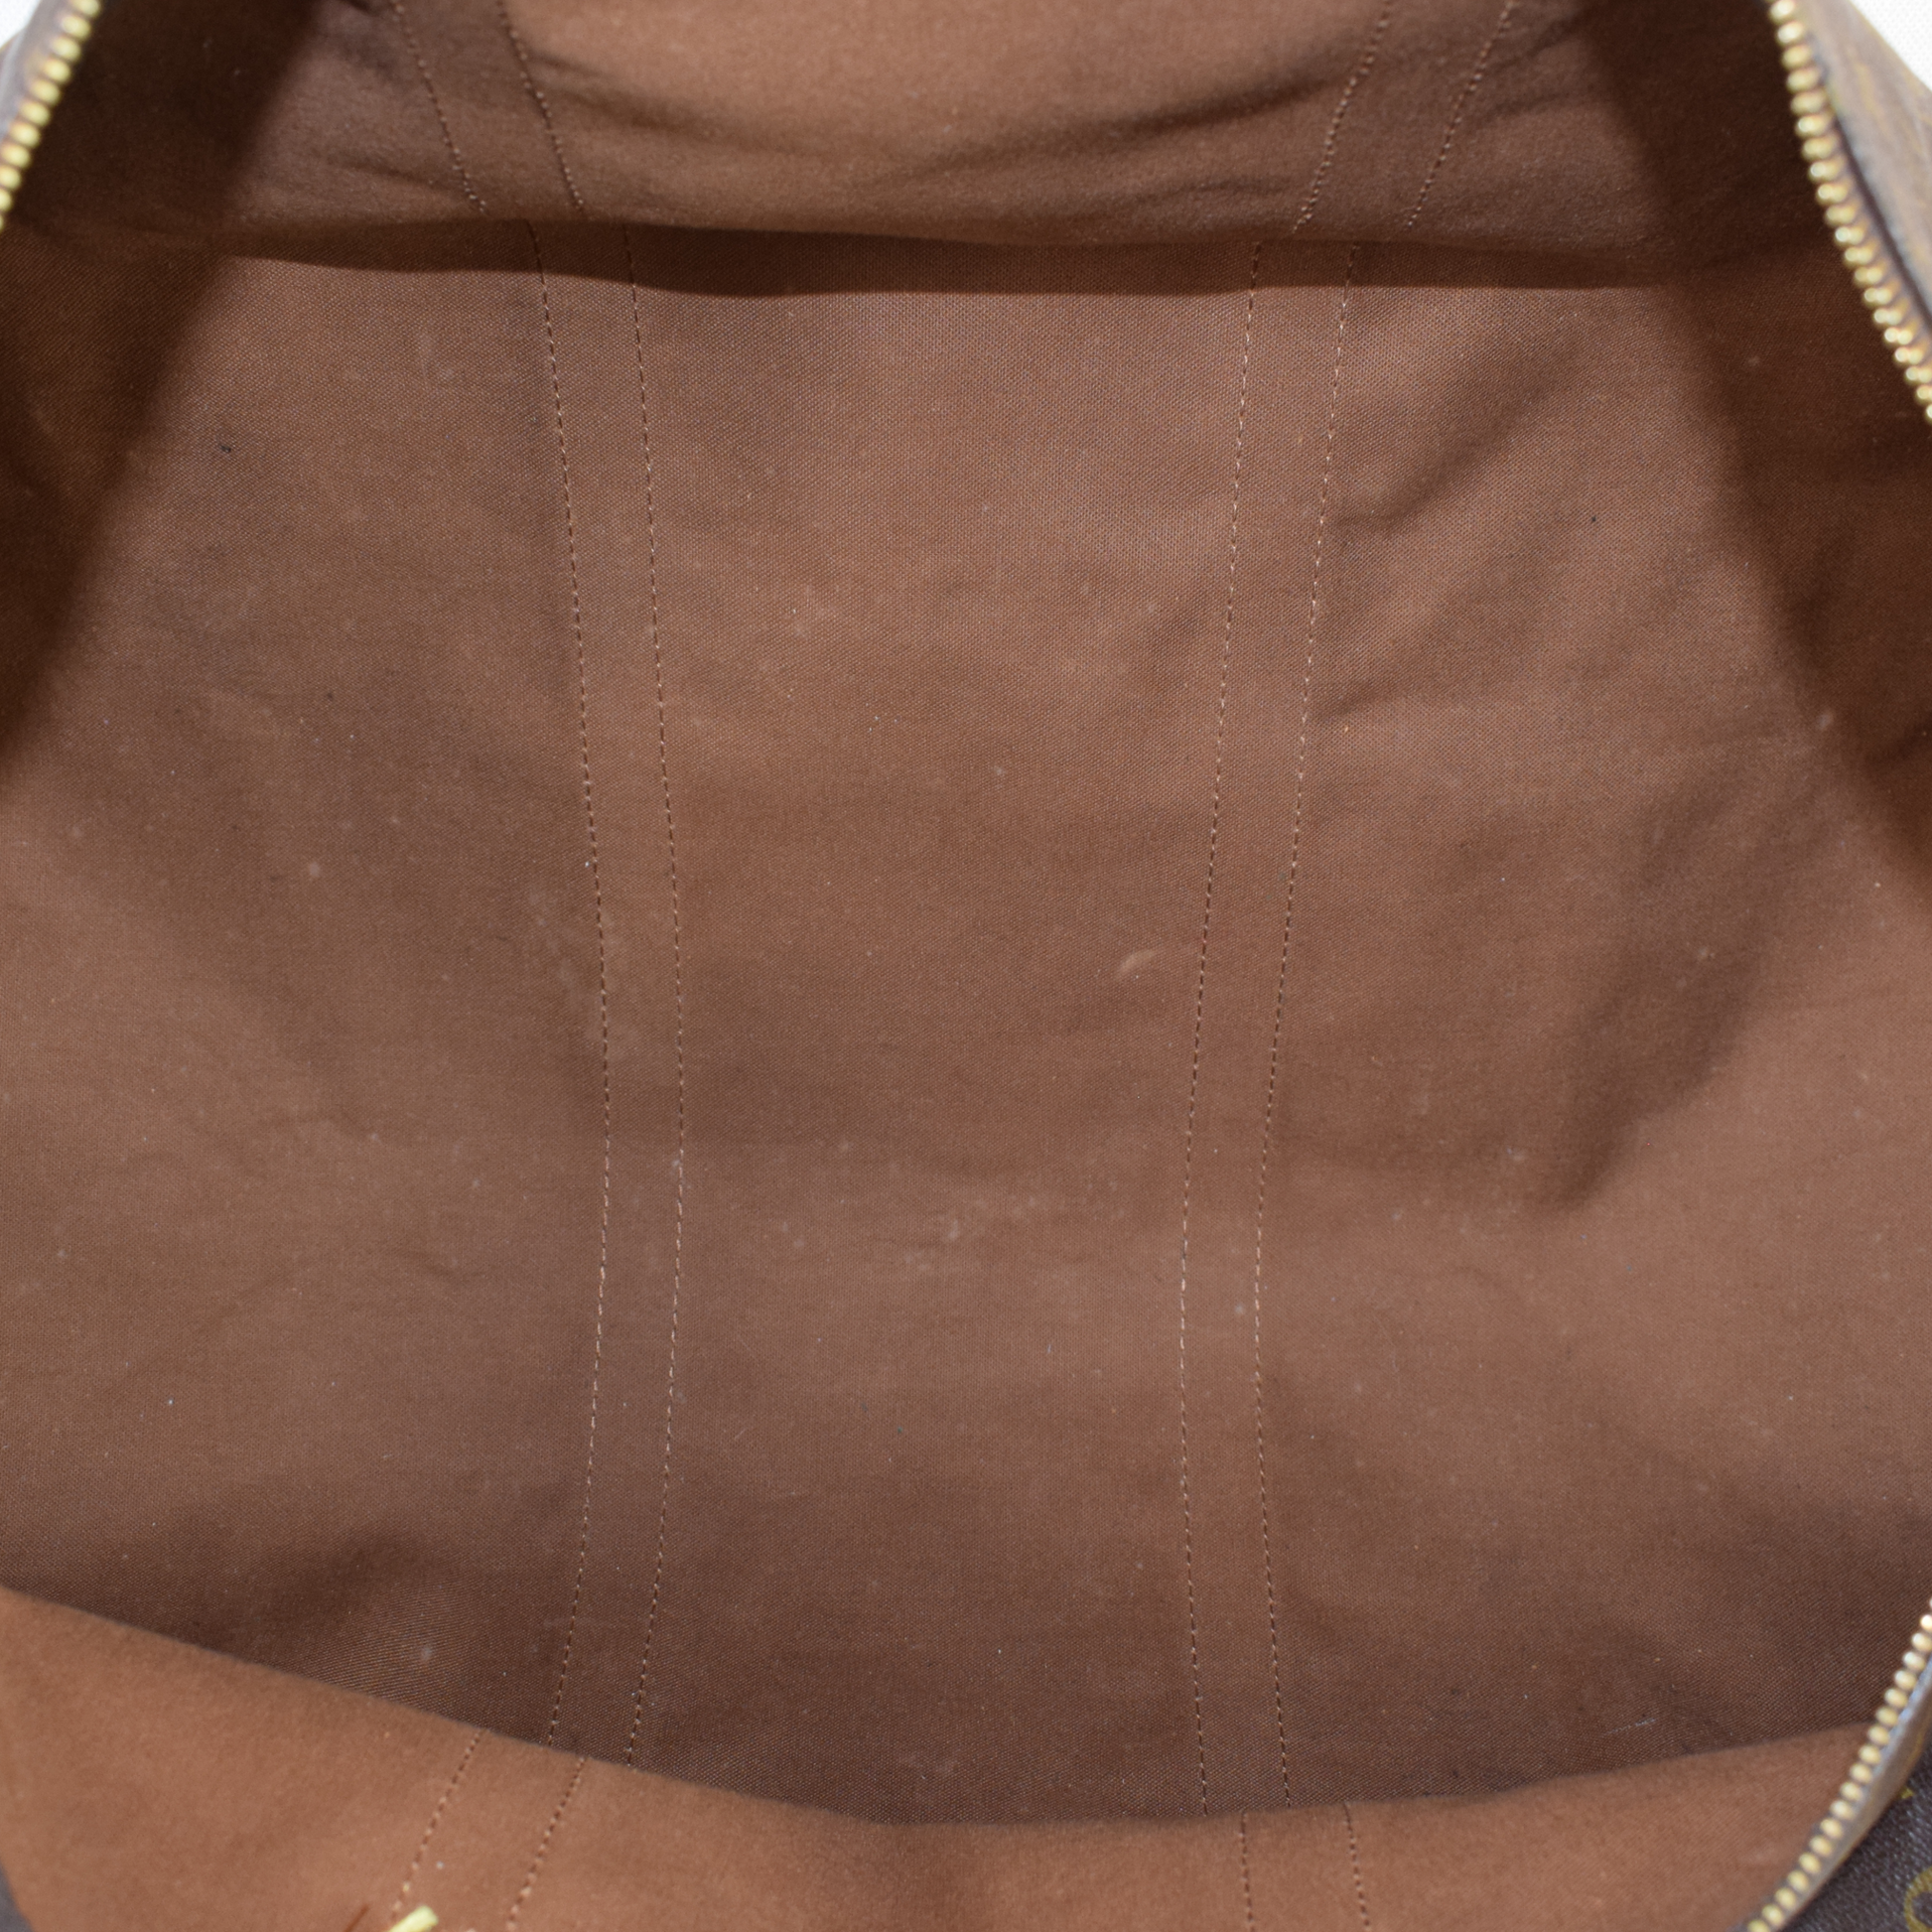 Shop for Louis Vuitton Monogram Canvas Leather Keepall 60 cm